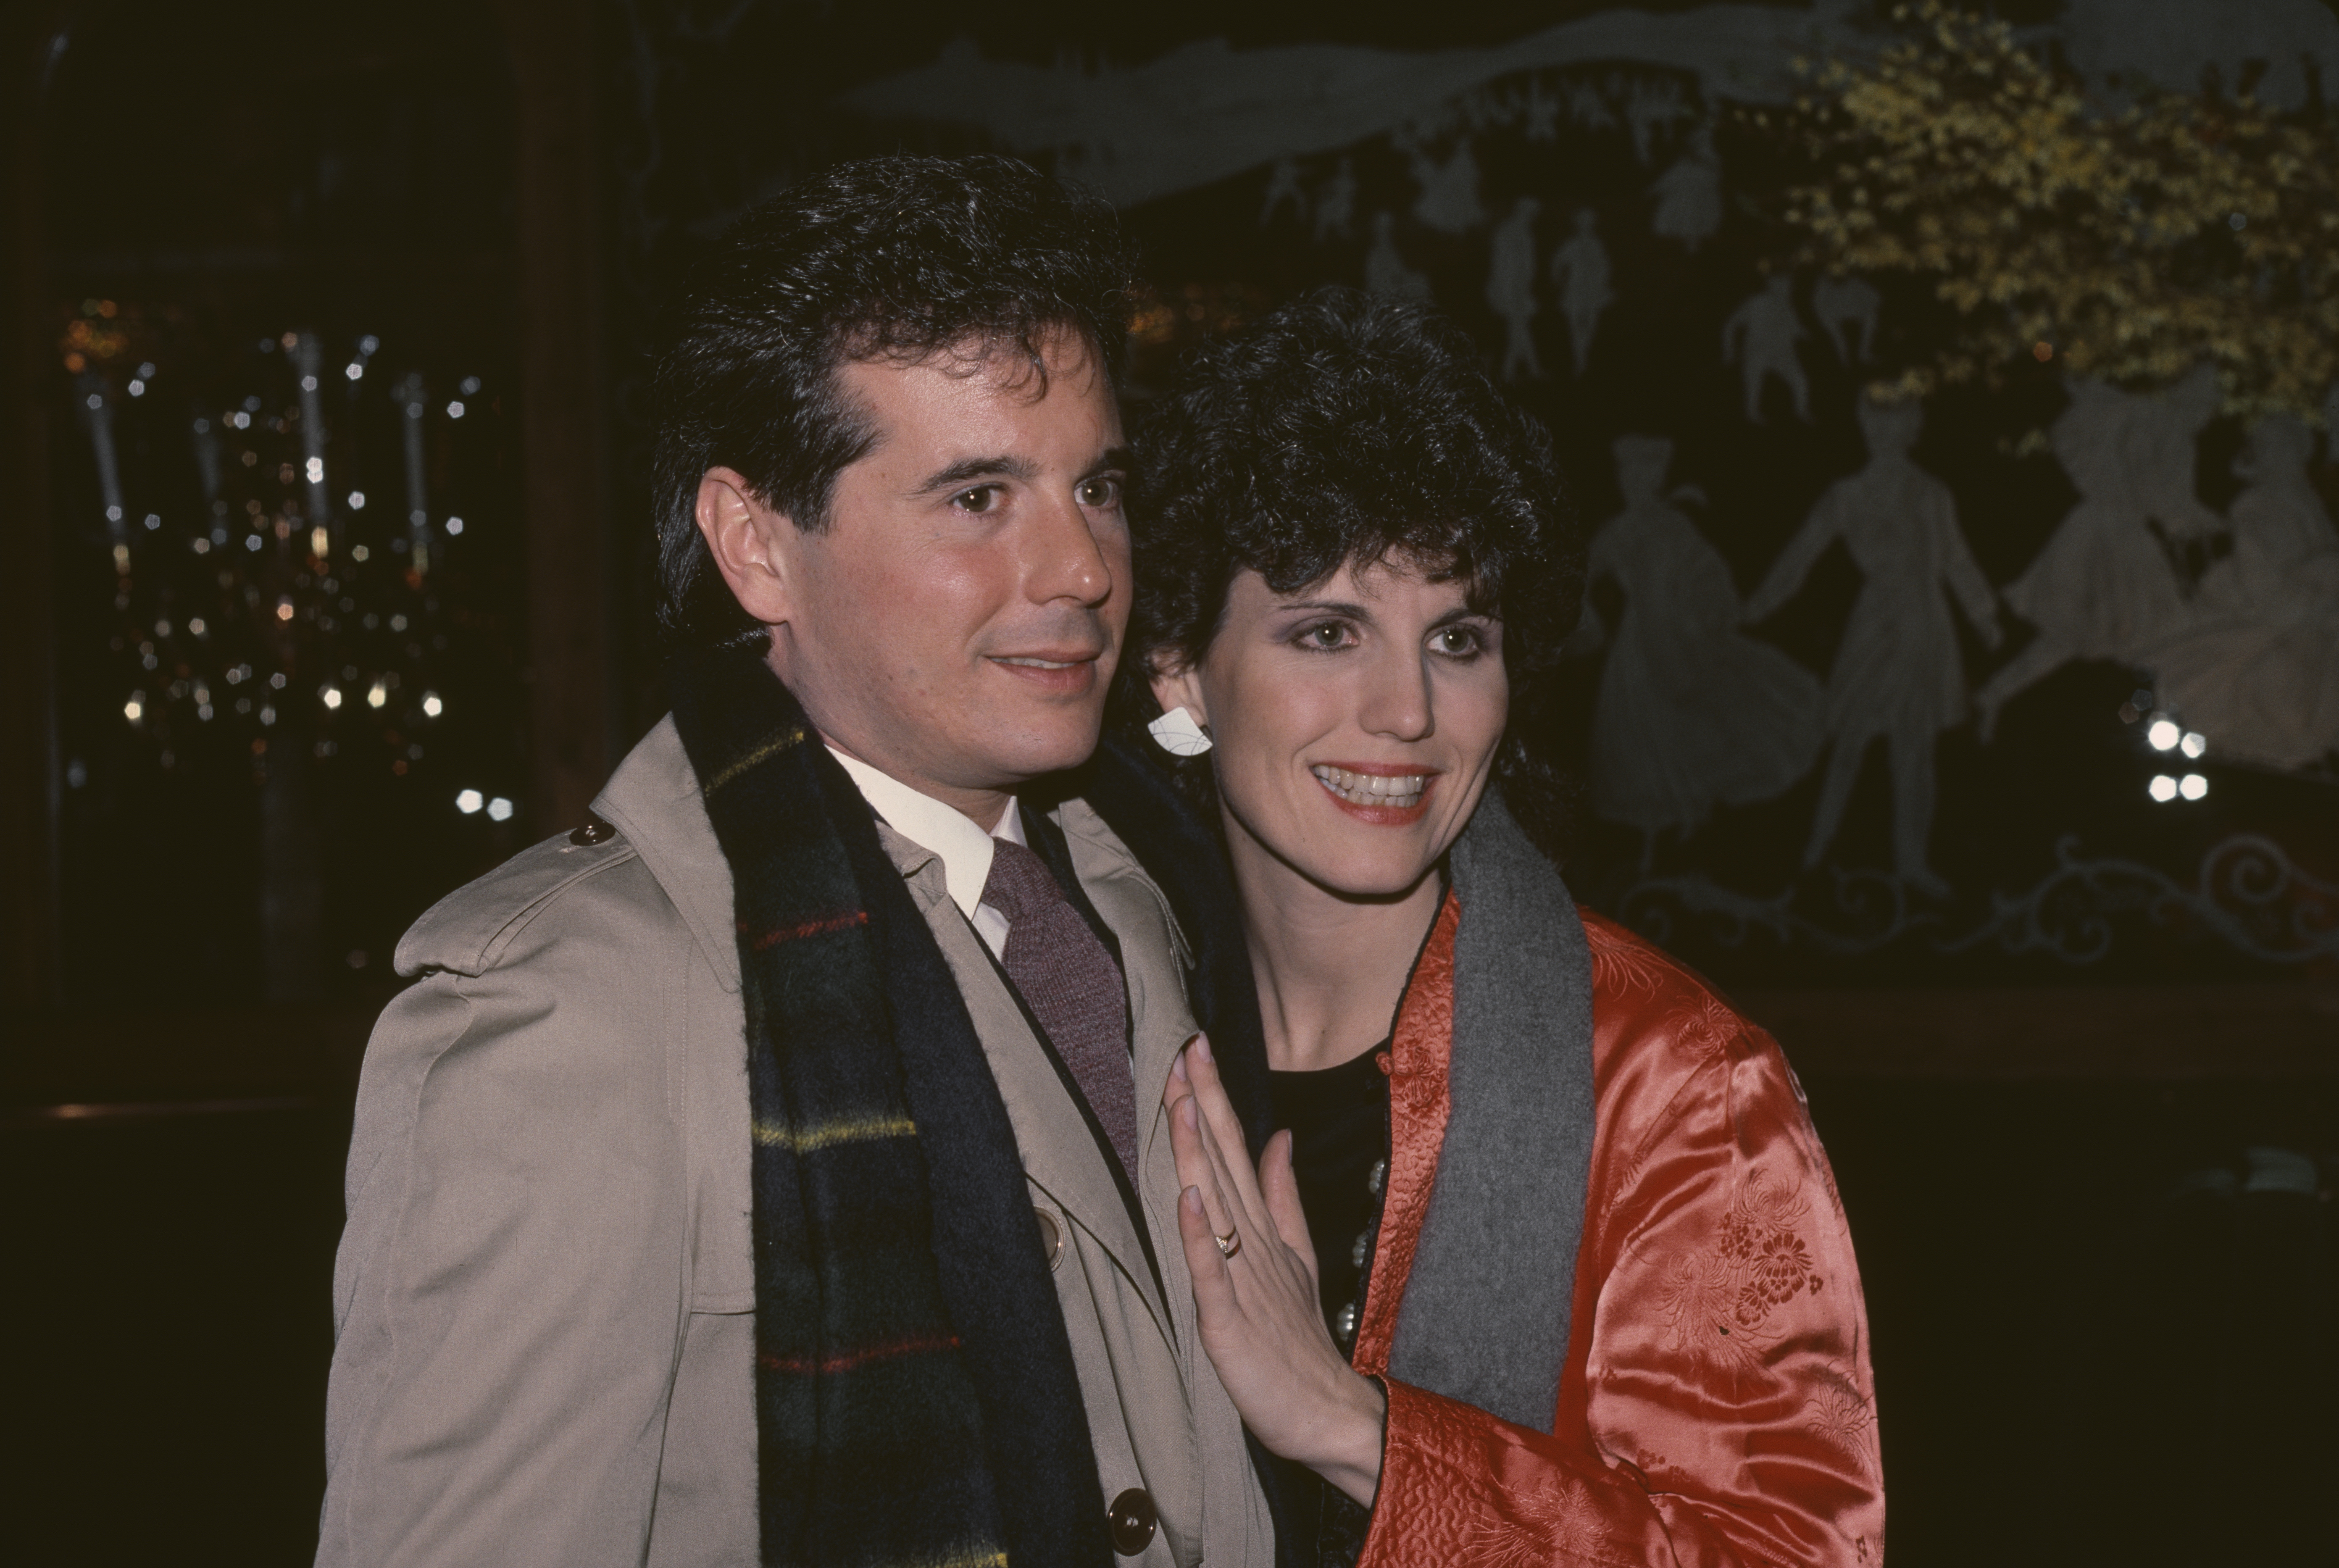 Lucie Arnaz and Desi Arnaz Jr., circa 1980 | Source: Getty Images